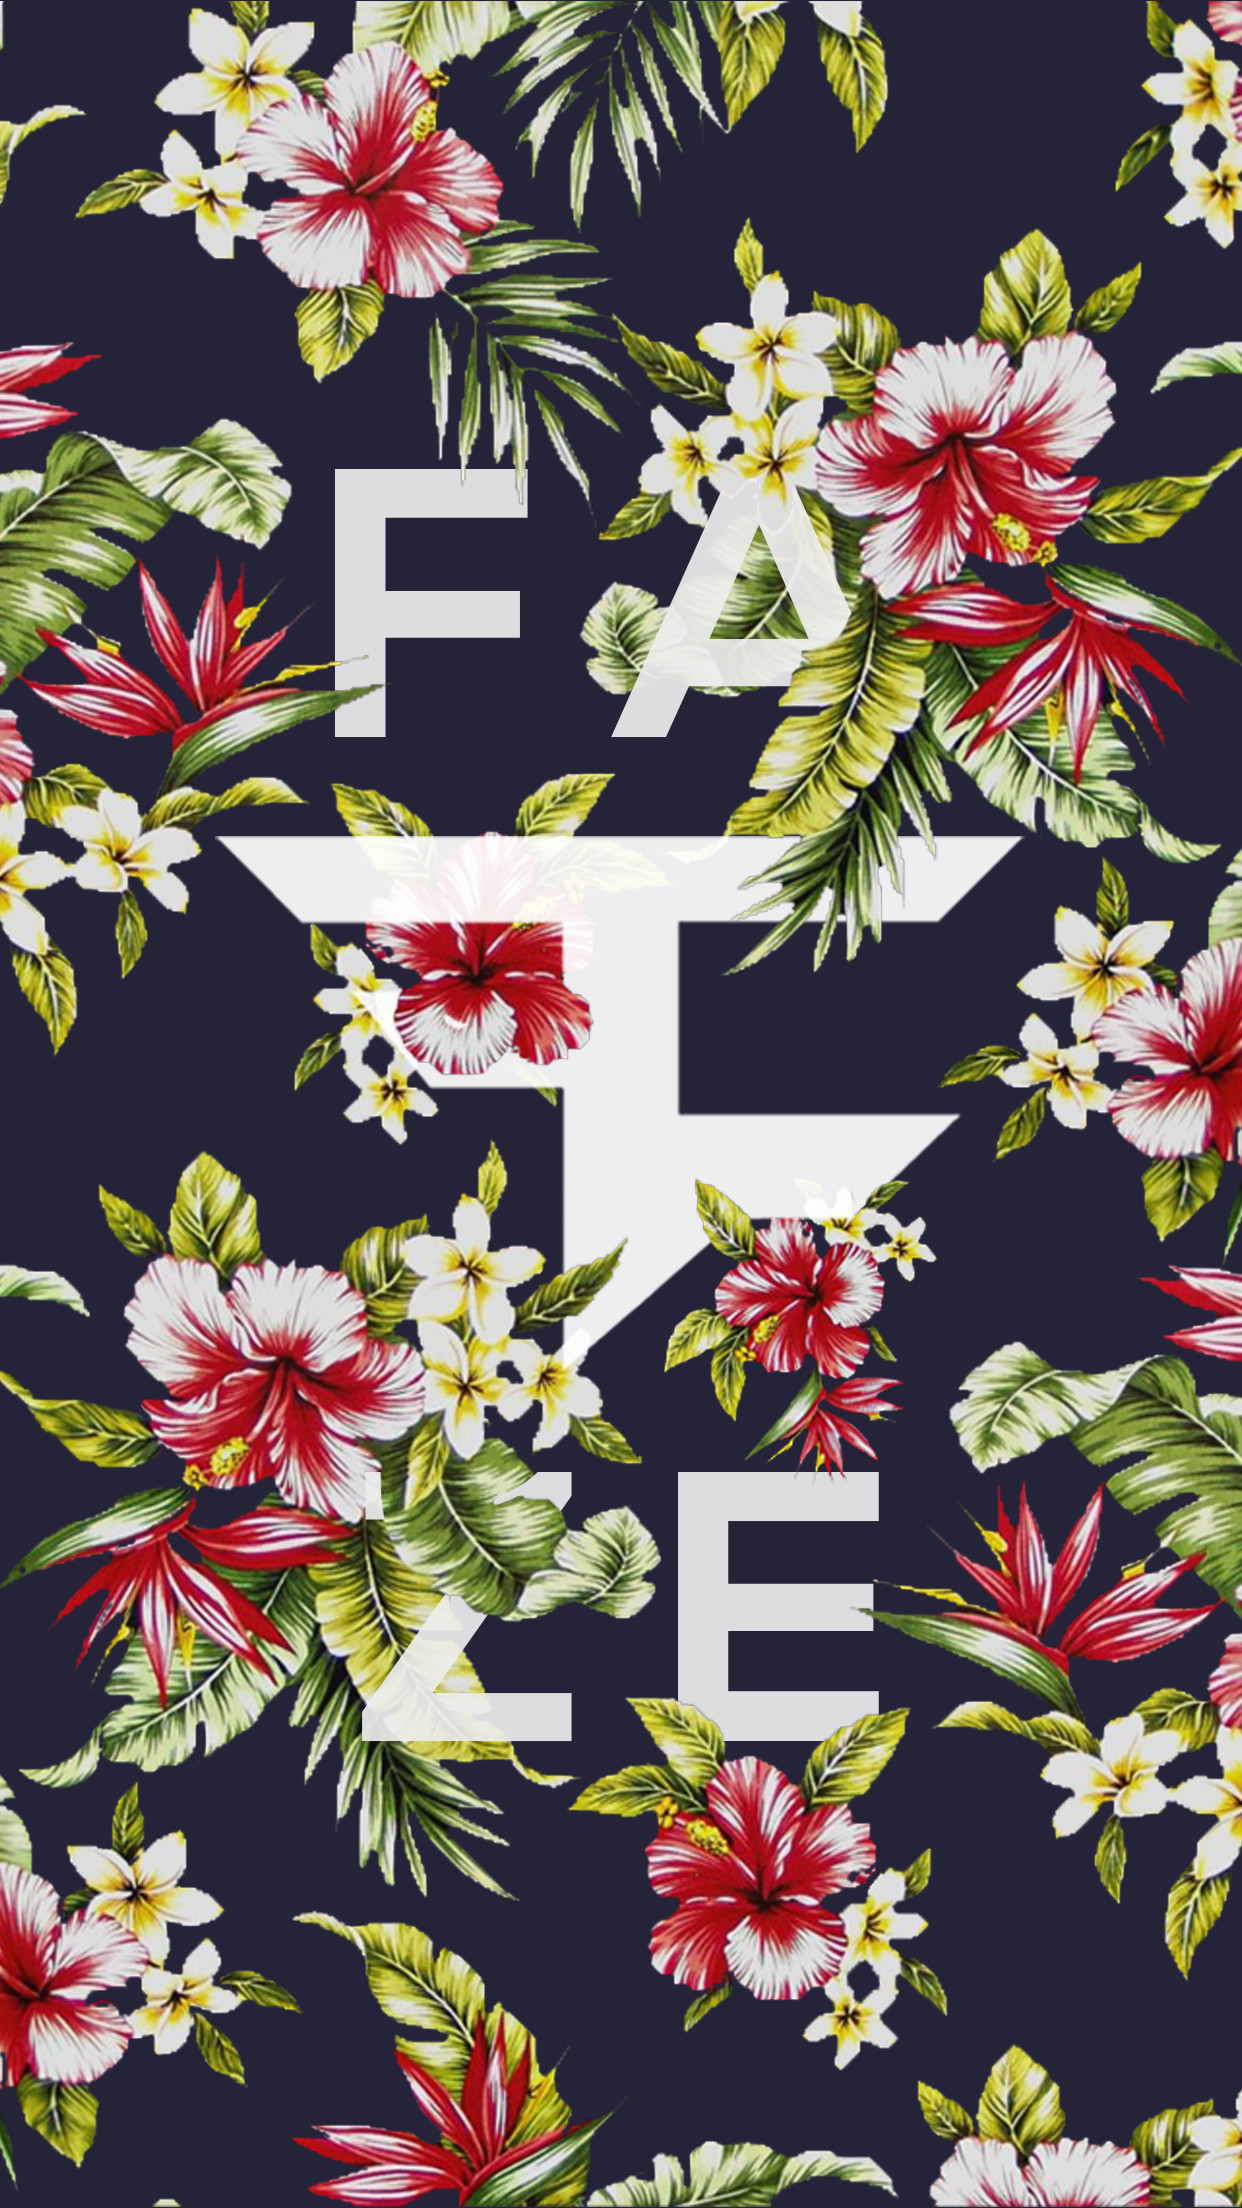 Faze Logo iPhone Wallpaper (92+ images)1242 x 2208